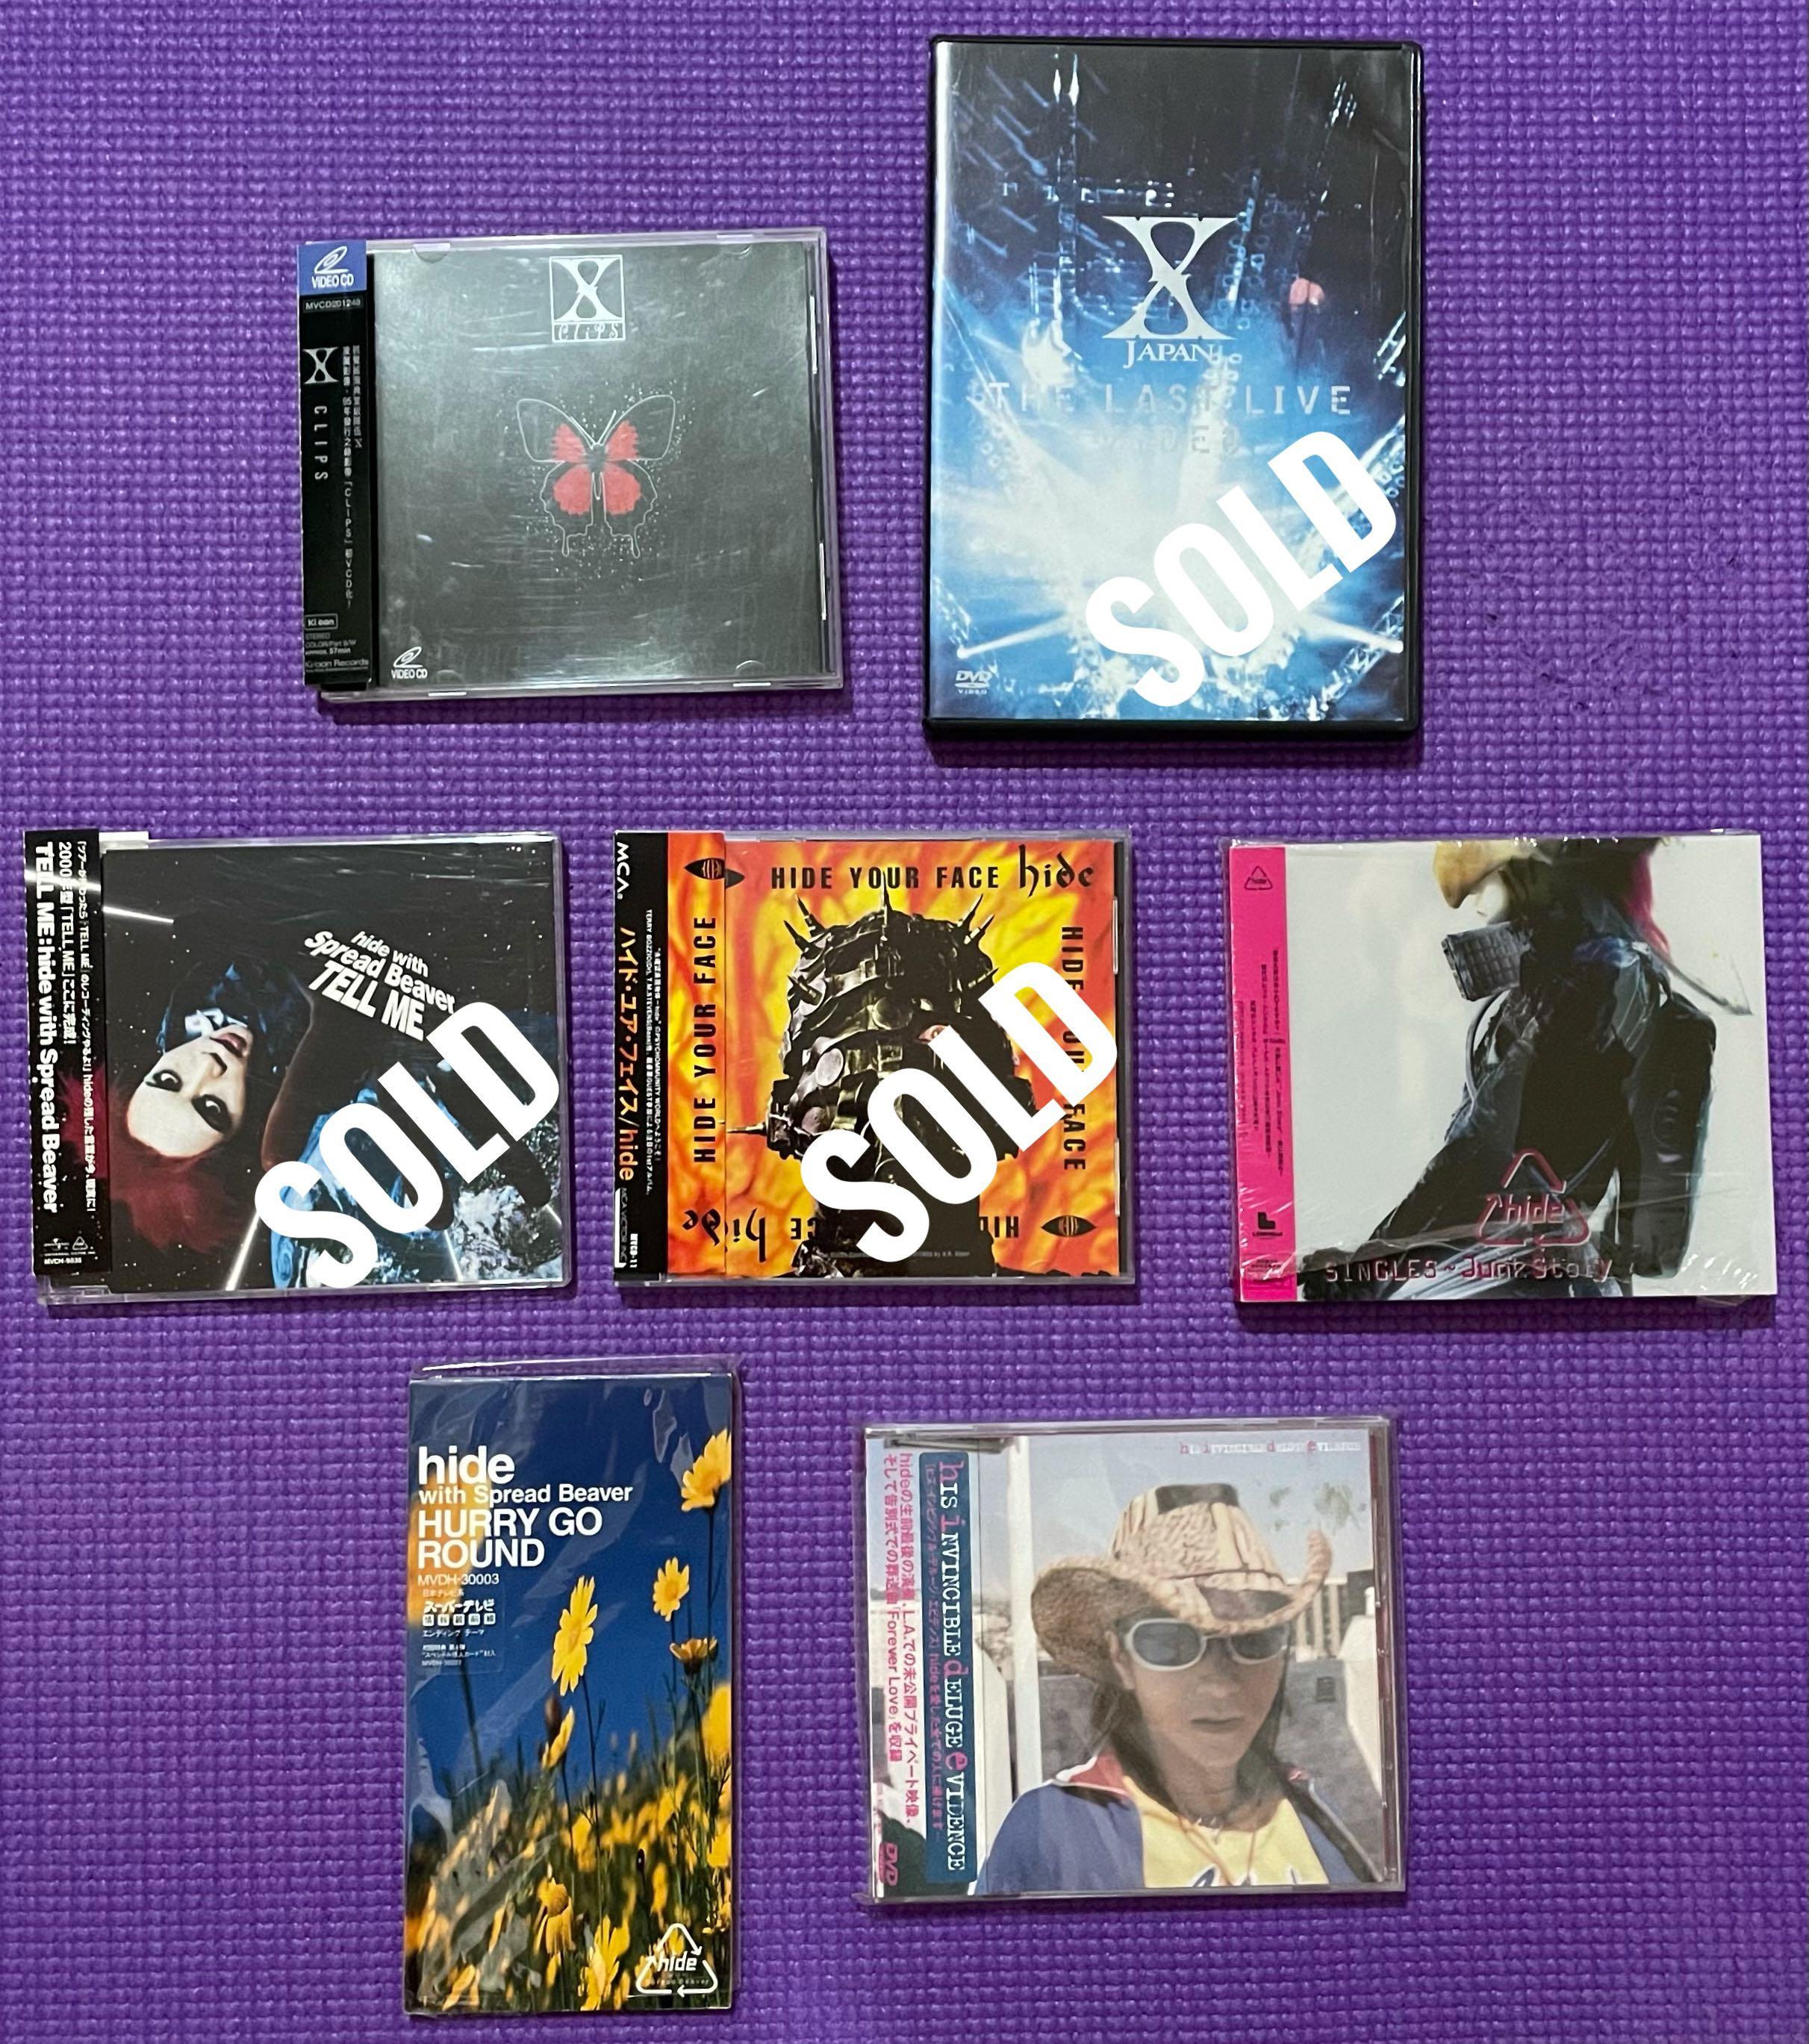 X、X Japan、hide CD、VCD、DVD - X Clips、Junk Story、Hurry Go